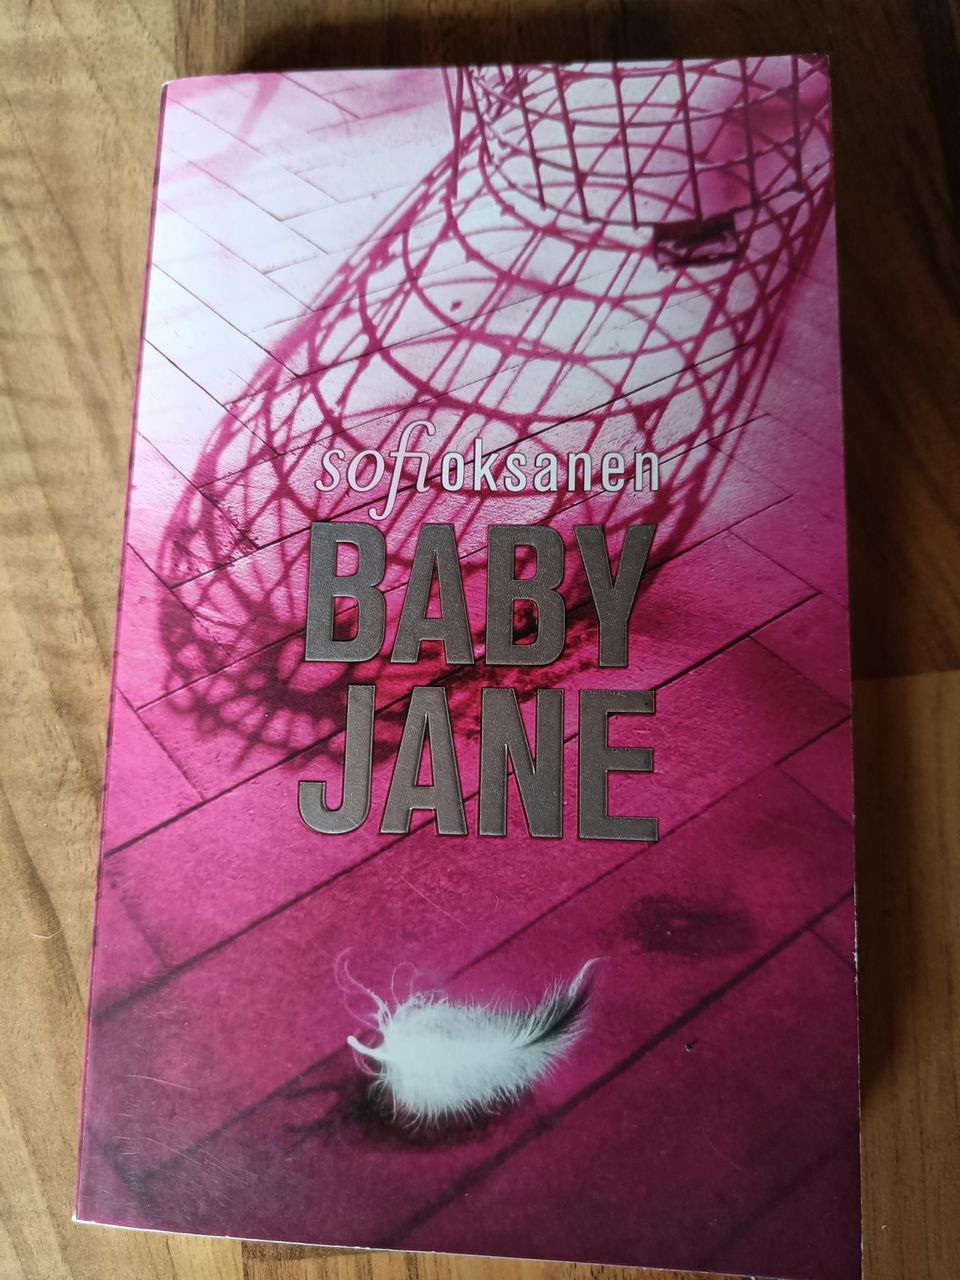 Baby Jane Sofi Oksanen